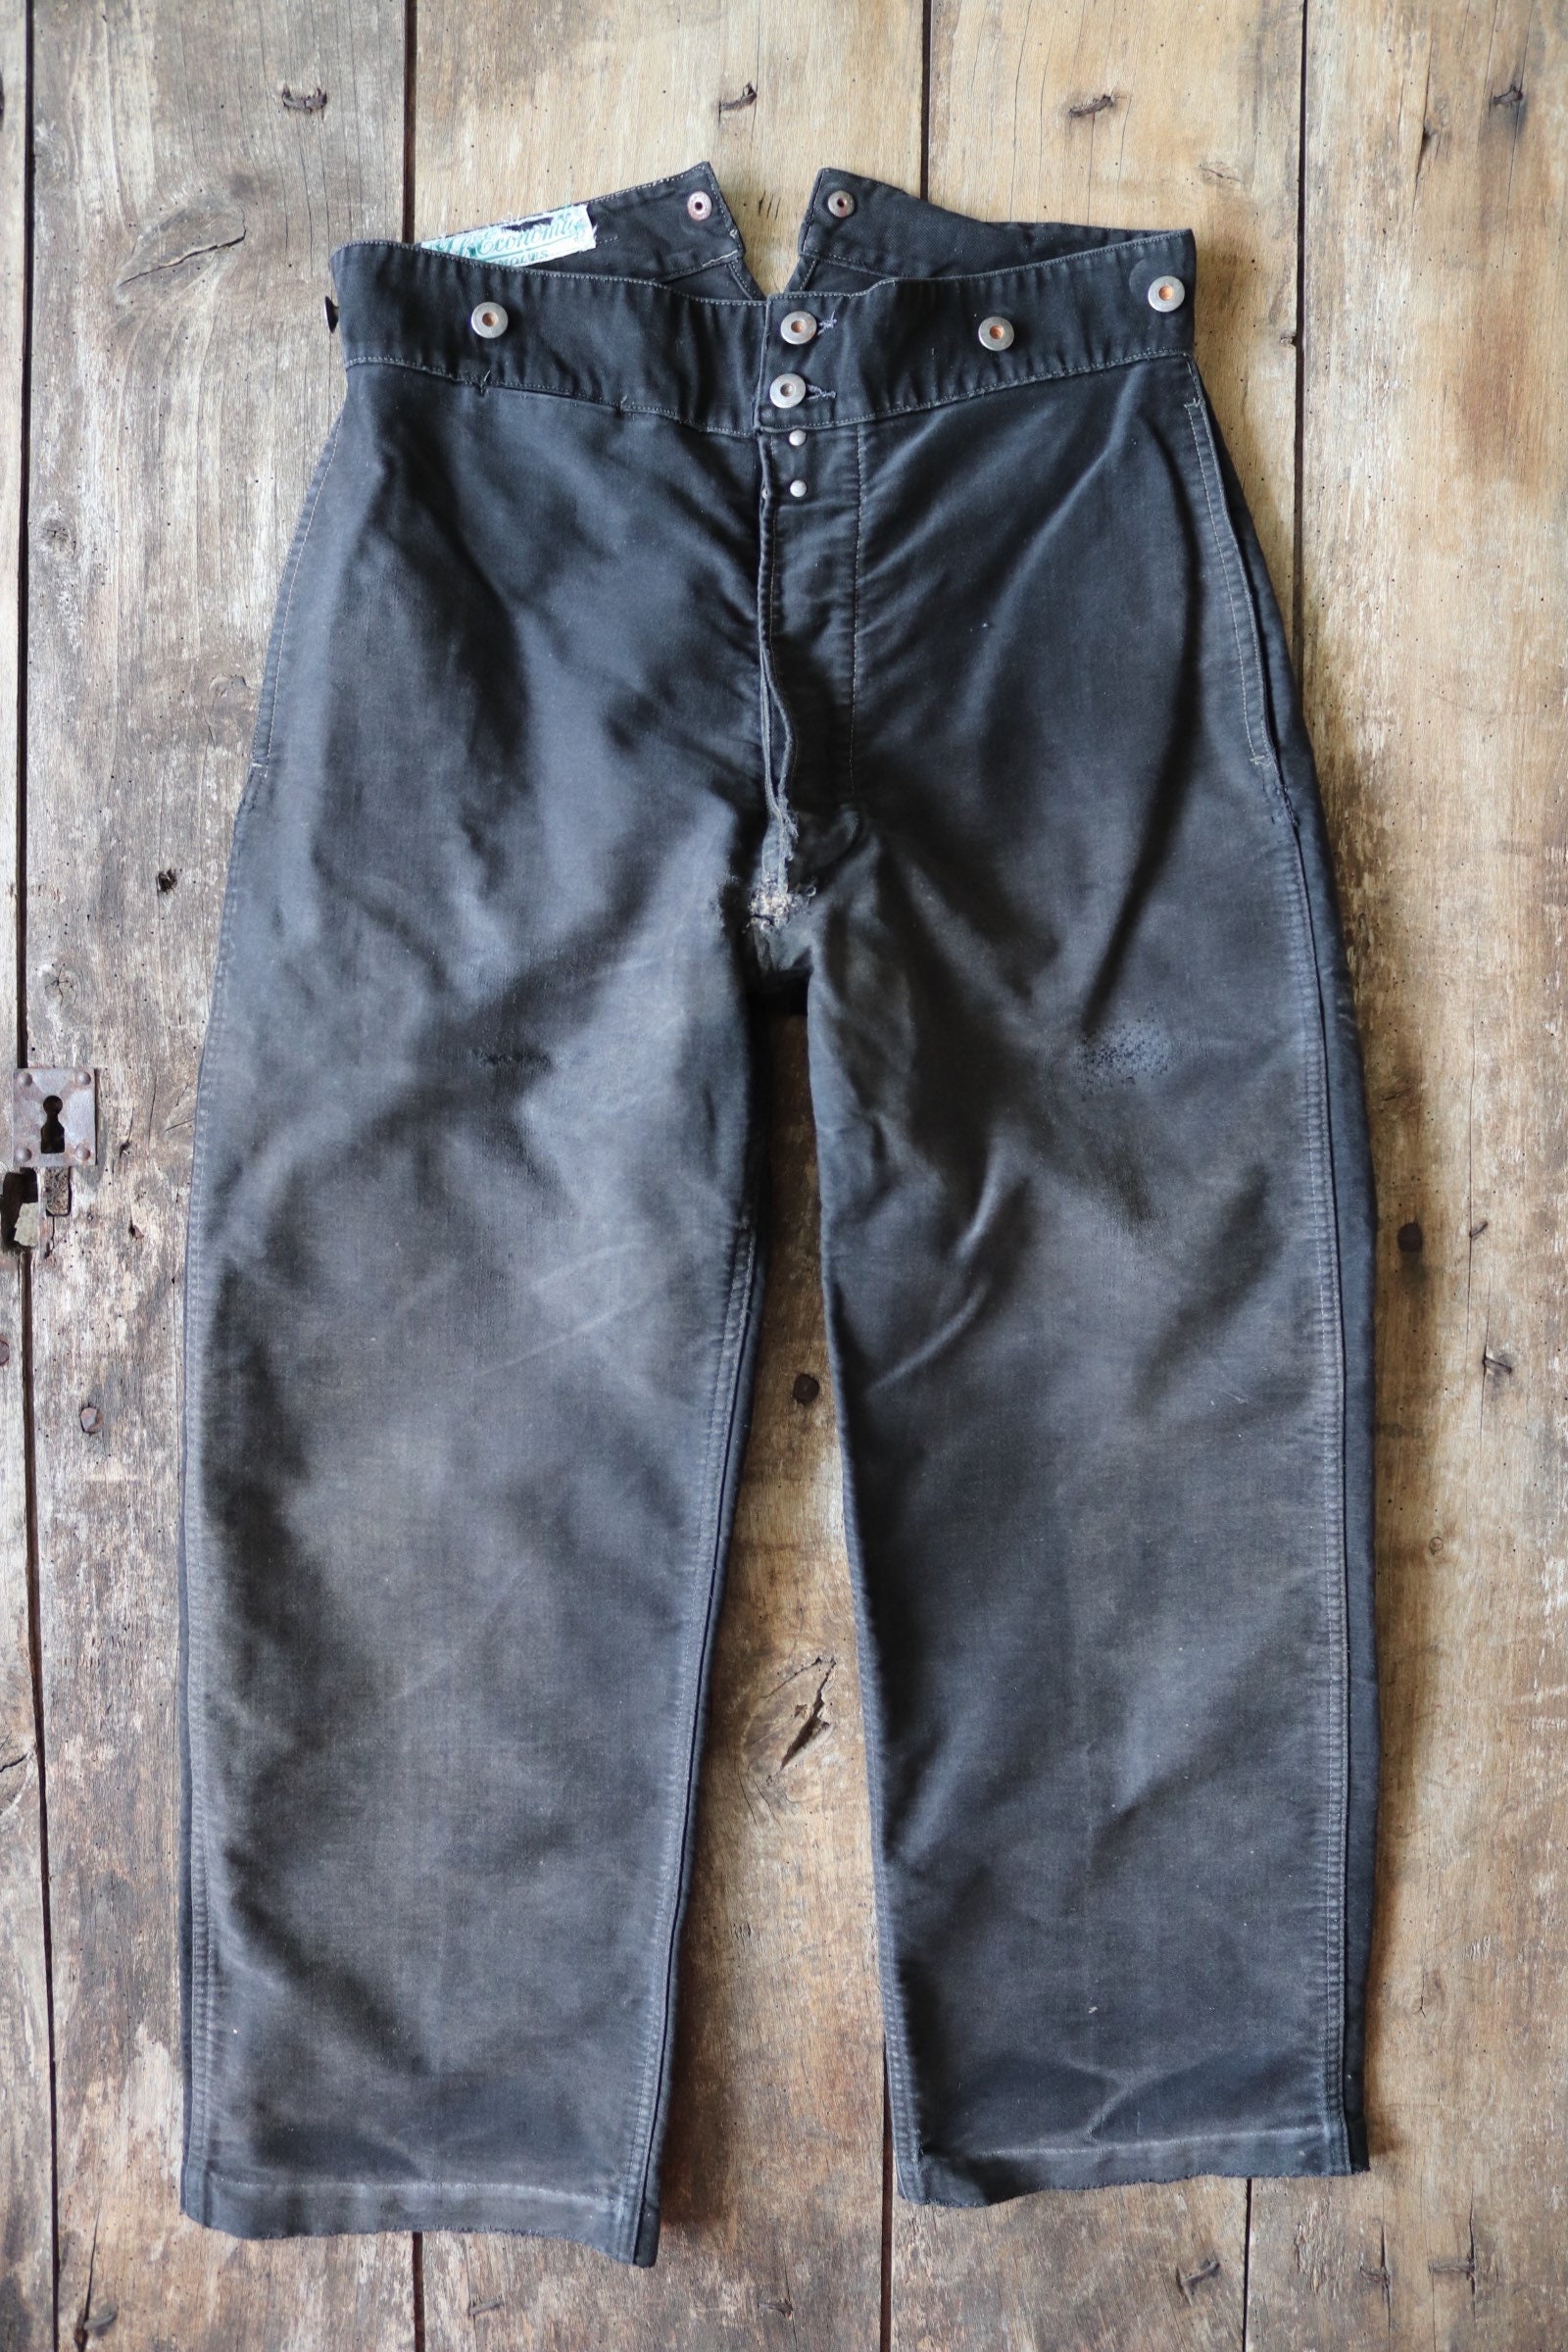 Vintage 1940s 40s 1950s 50s French black moleskin trousers pants